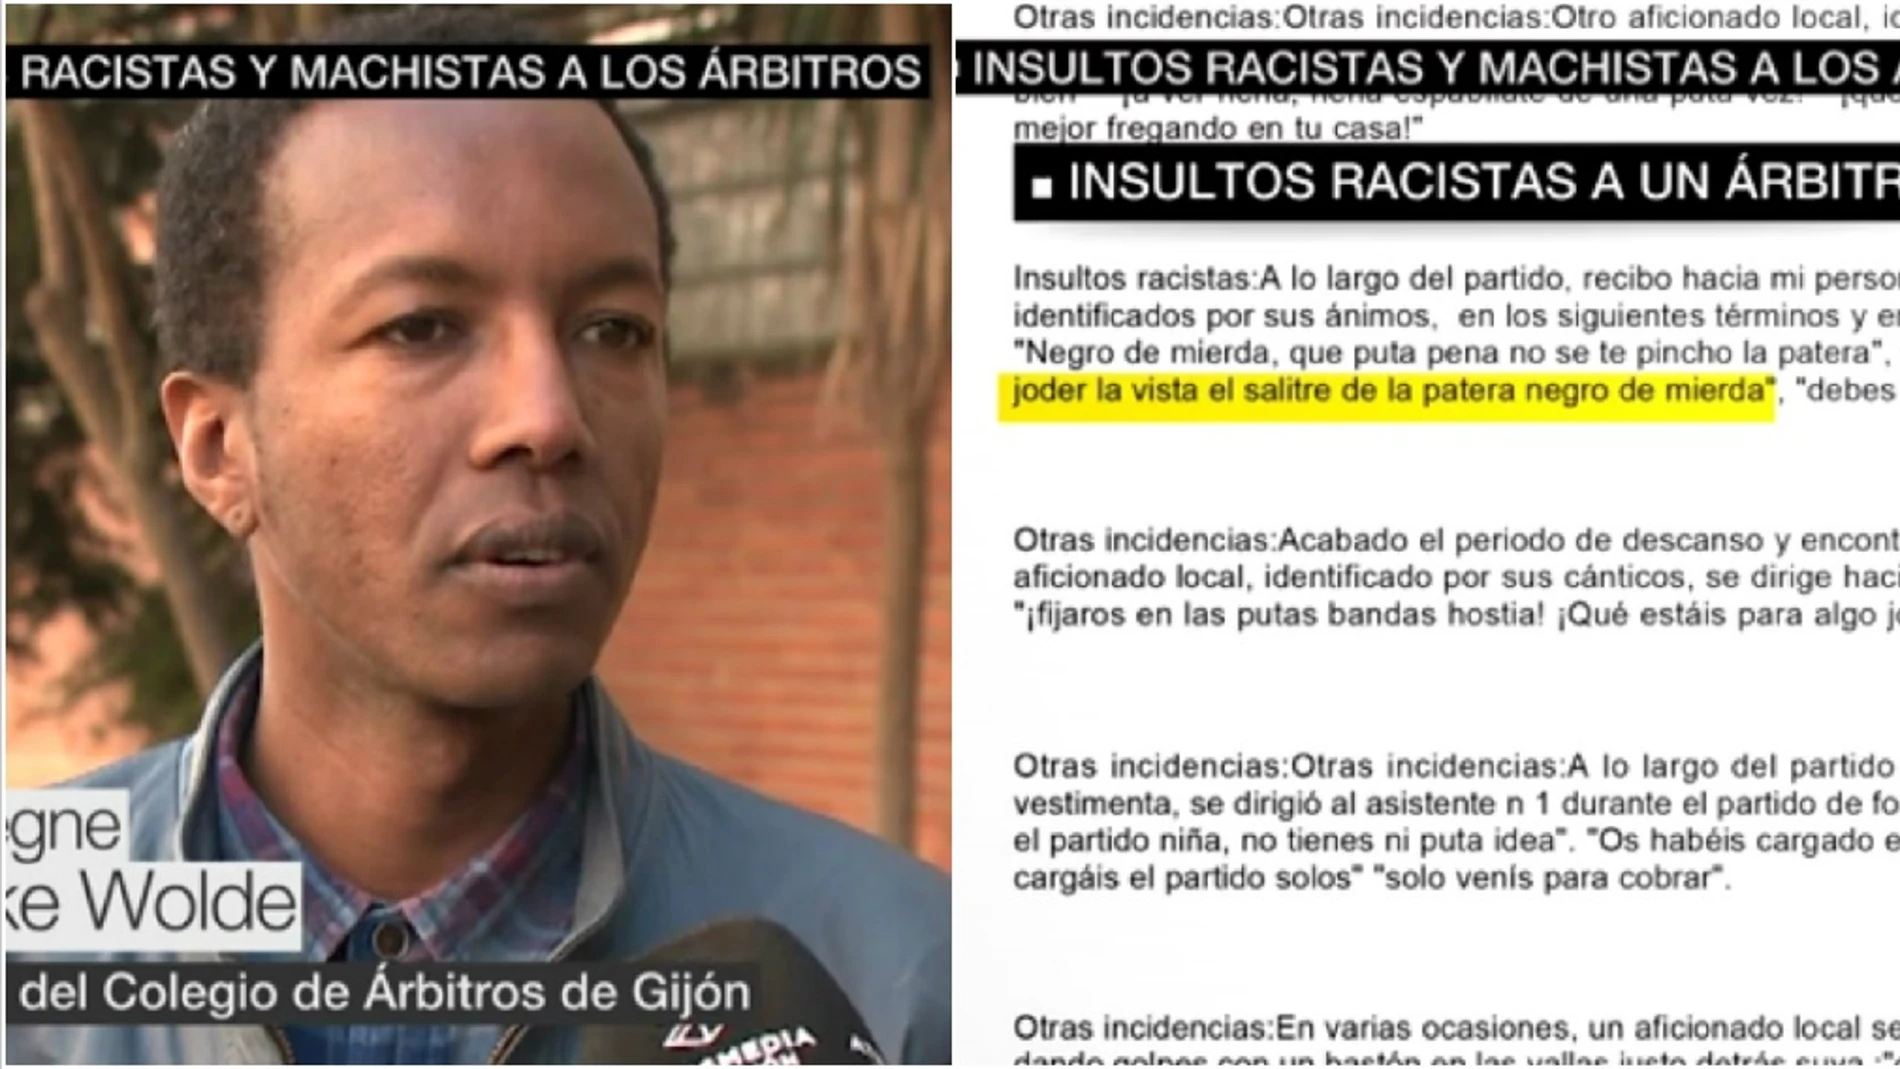 Tarekegne Asnake Wolde, árbitro objeto de insultos racistas en Asturias